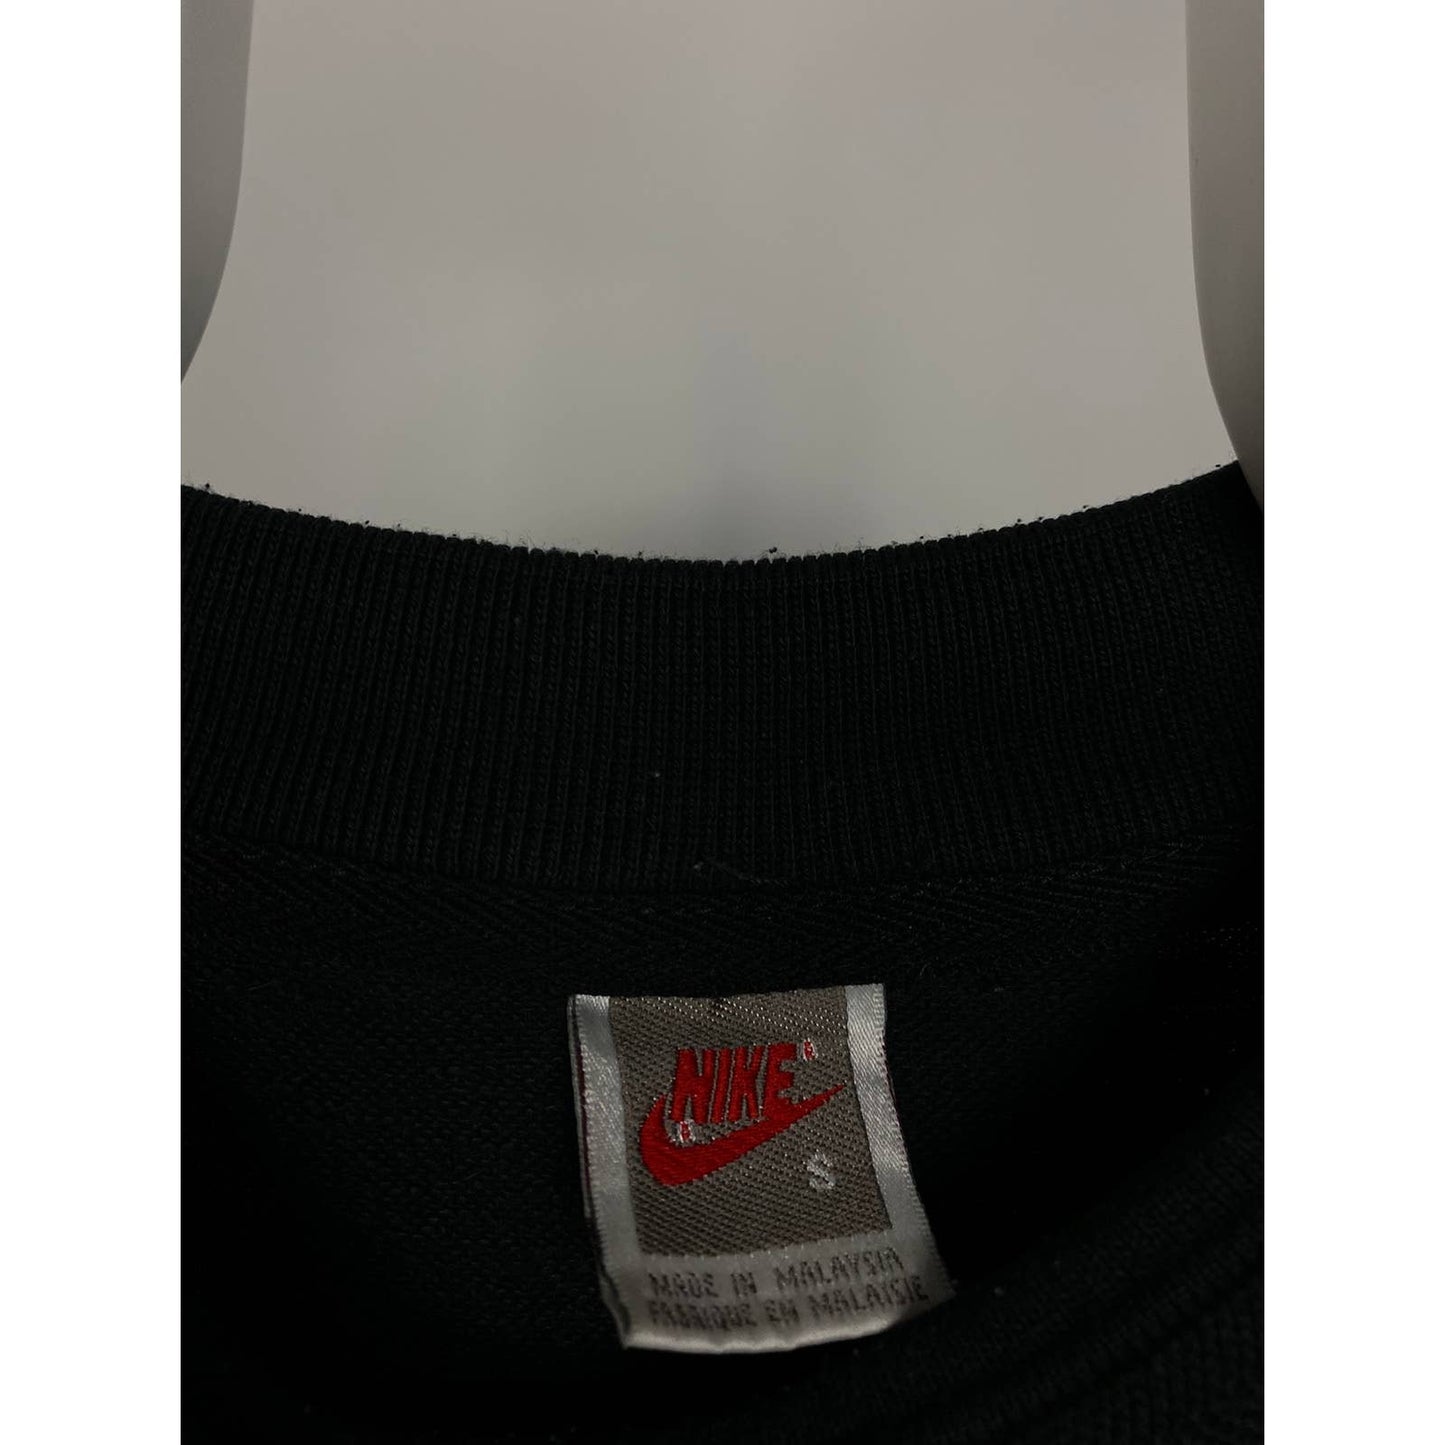 Rare! Nike Vintage cross training sweatshirt 80s center logo